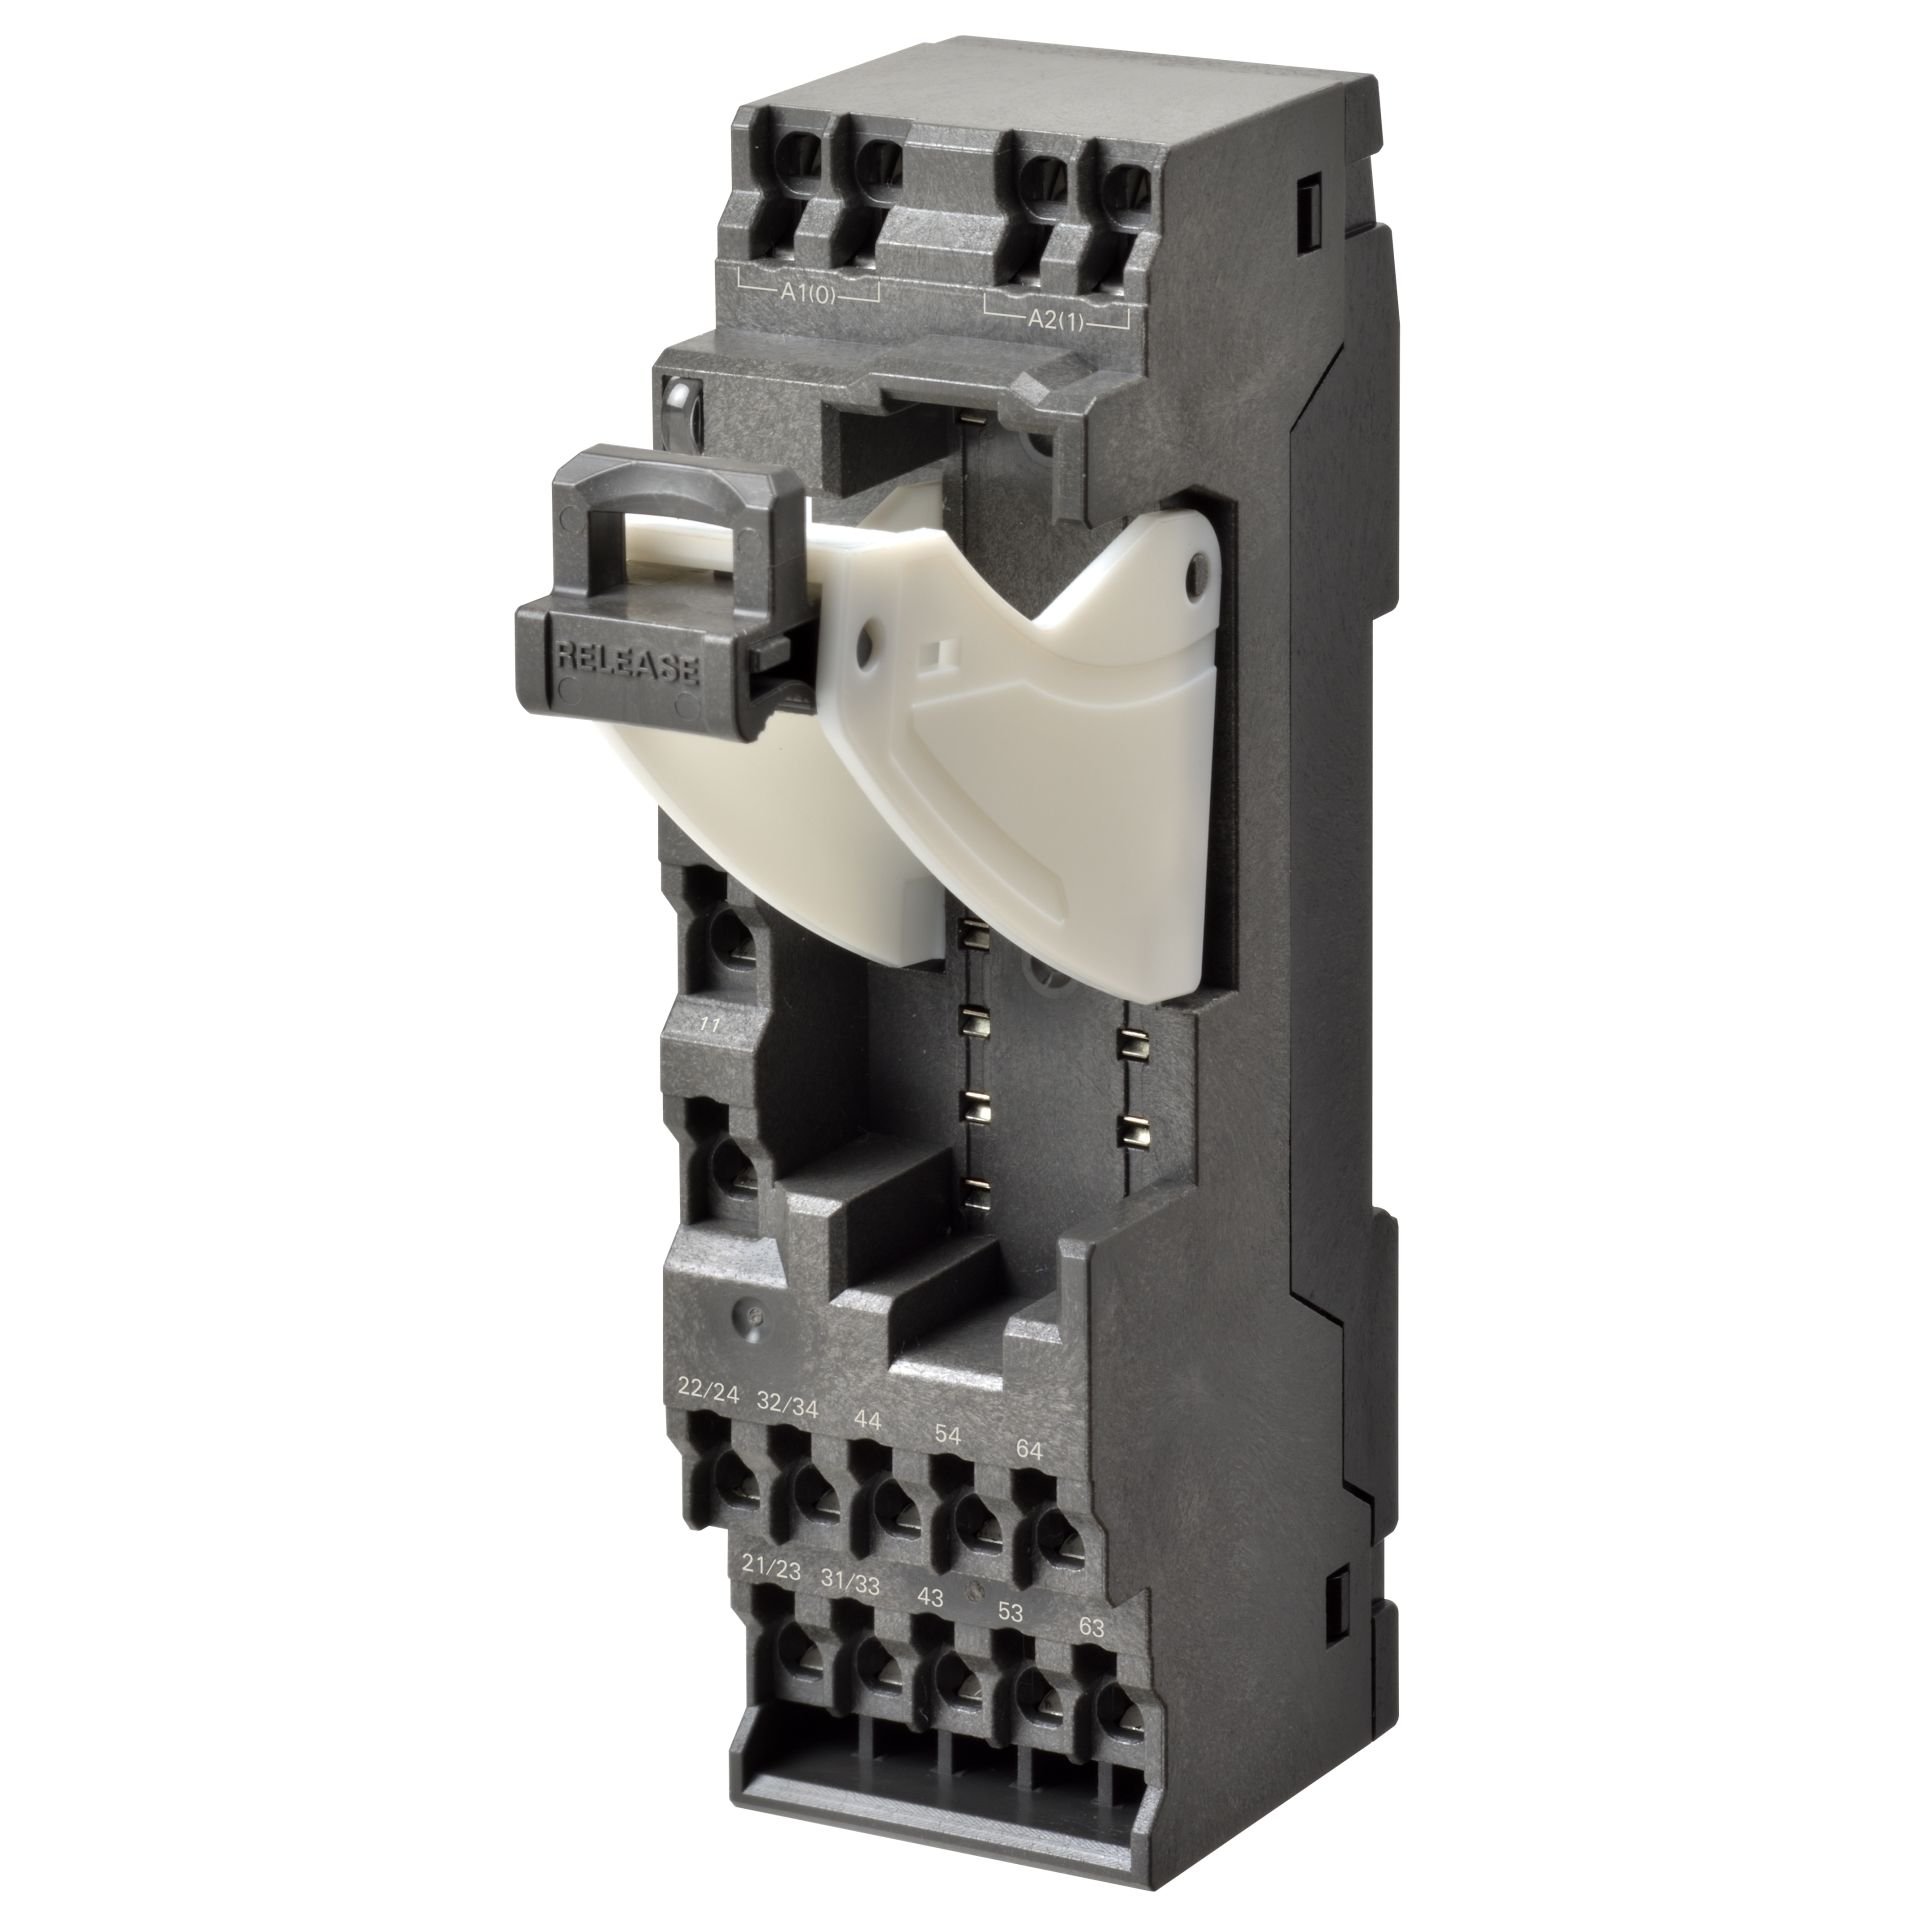 Omron - P7SA-14F-ND-PU 24VDC  Socket, DIN rail/surface mounting, 14 pin, push in terminals, for G7SA 6 pole relays, LED indicator